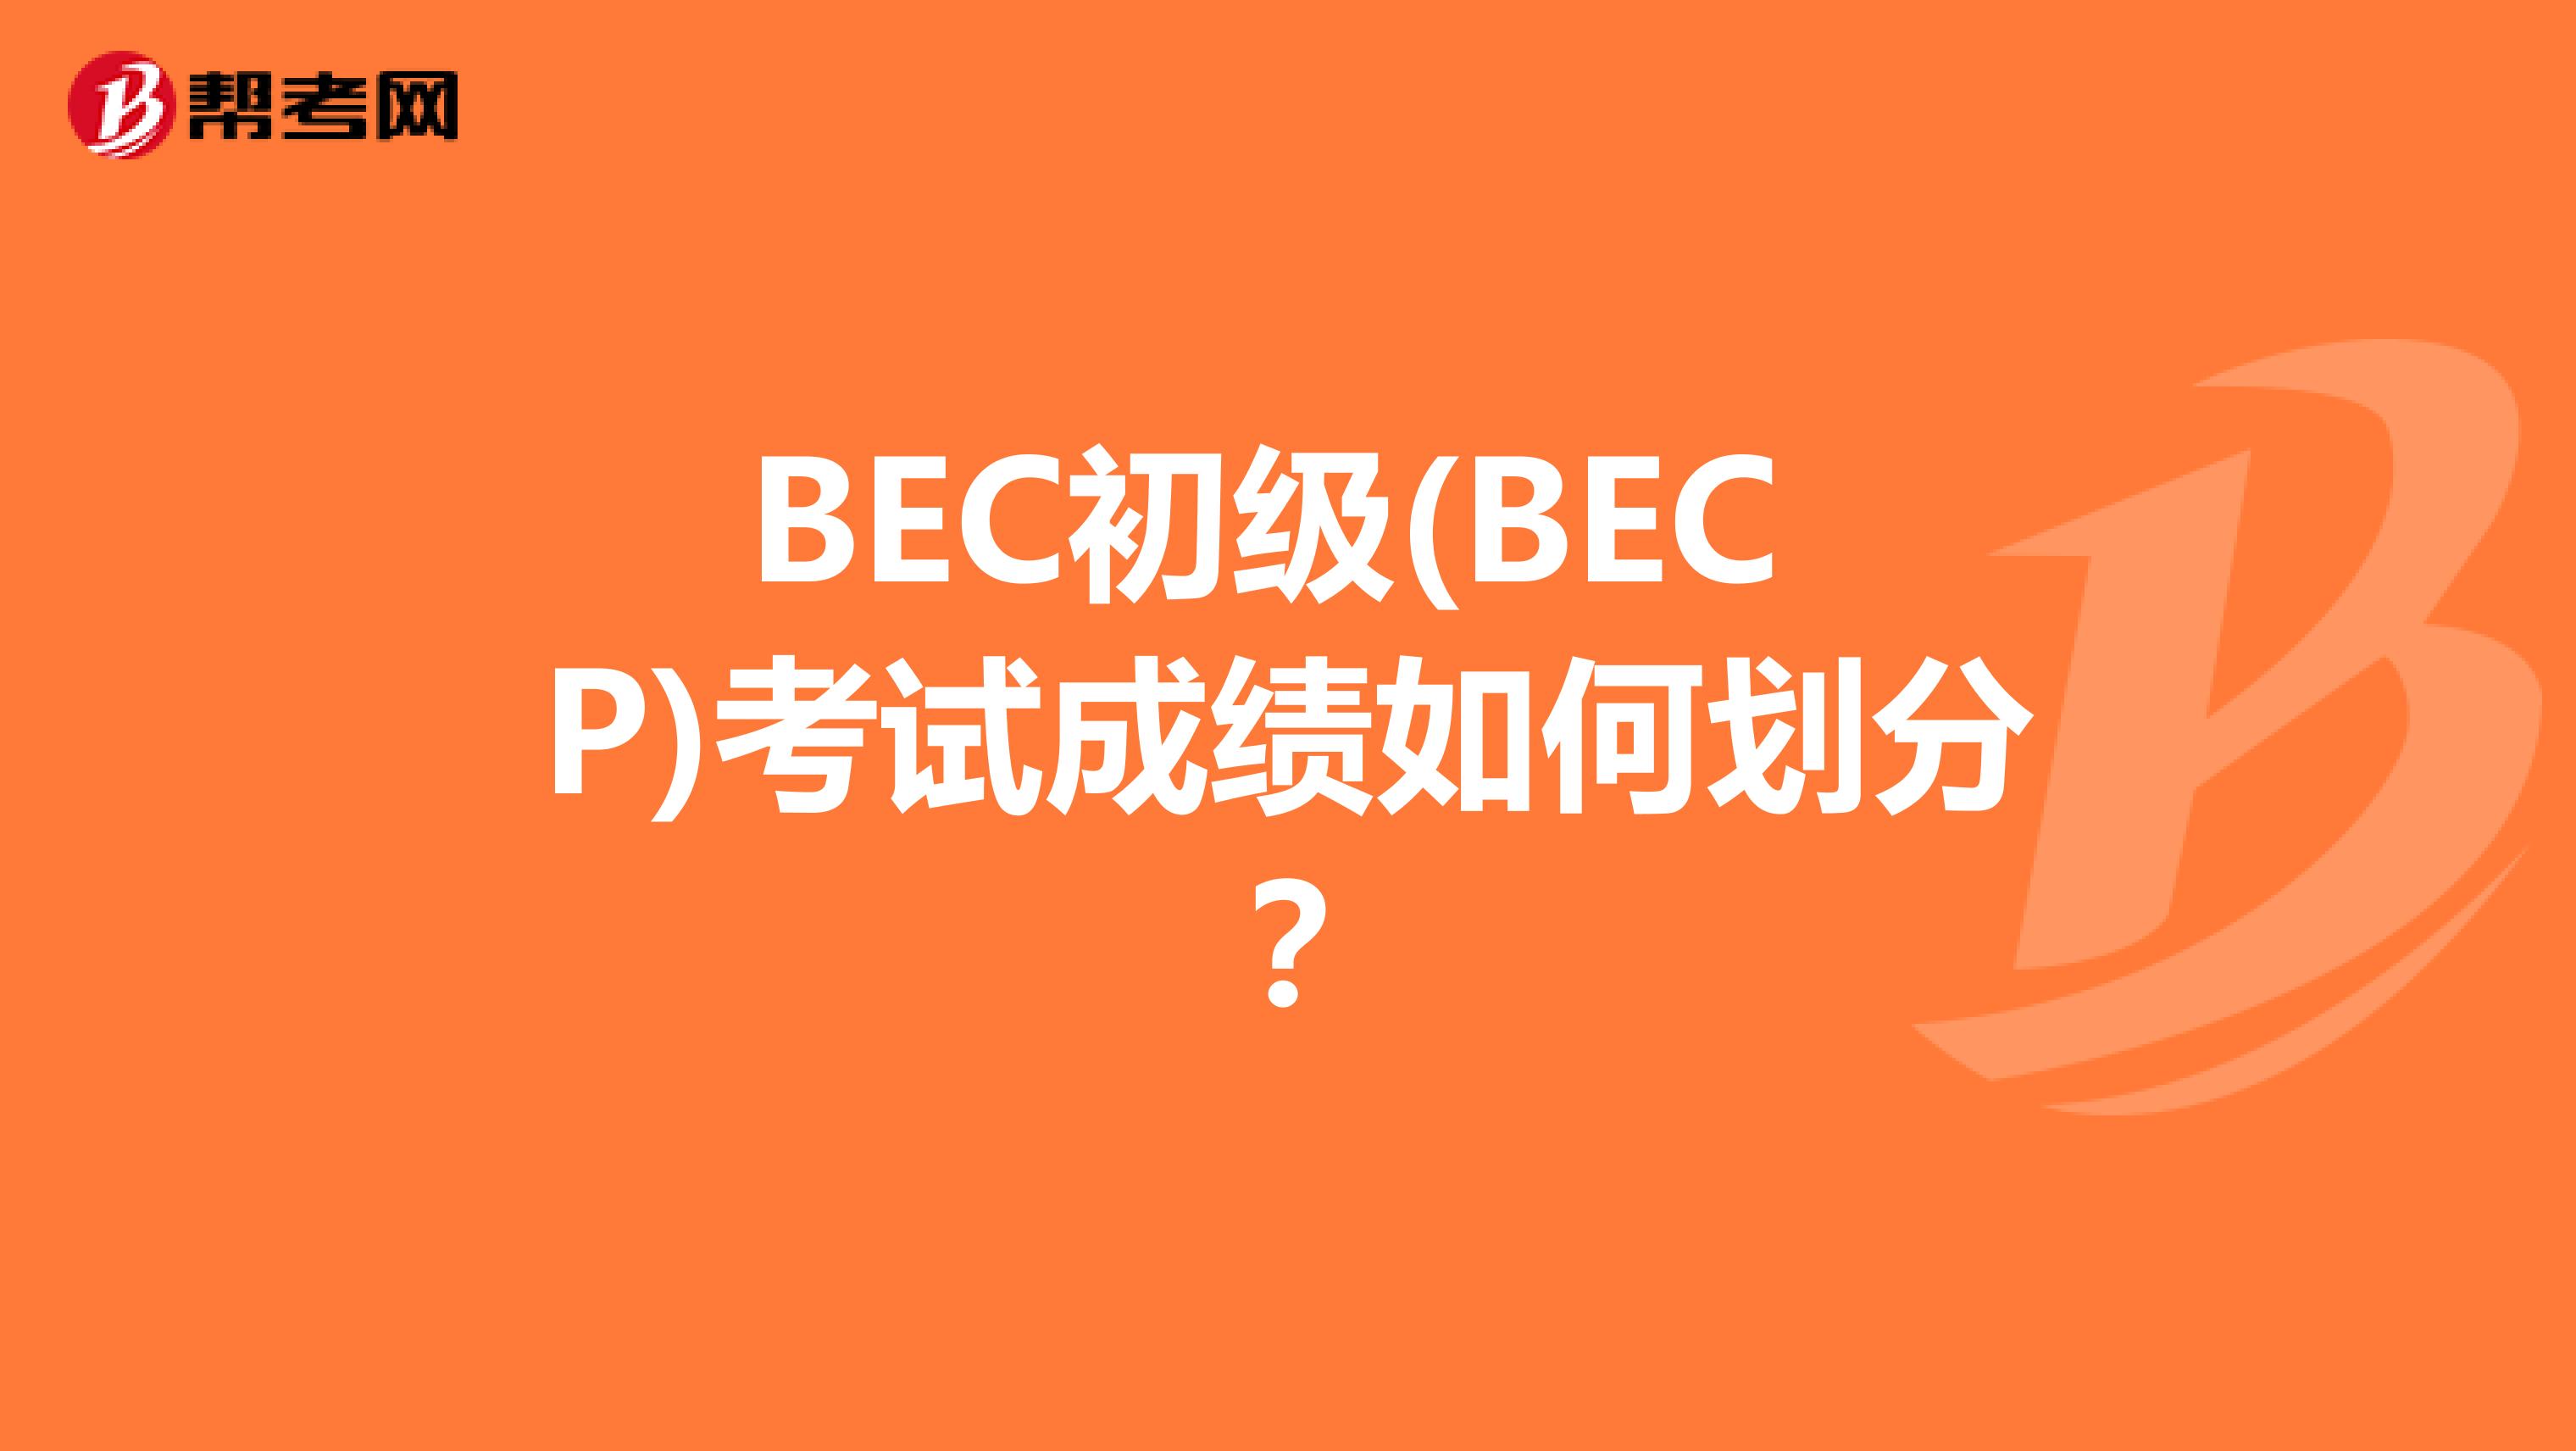 BEC初级(BEC P)考试成绩如何划分？